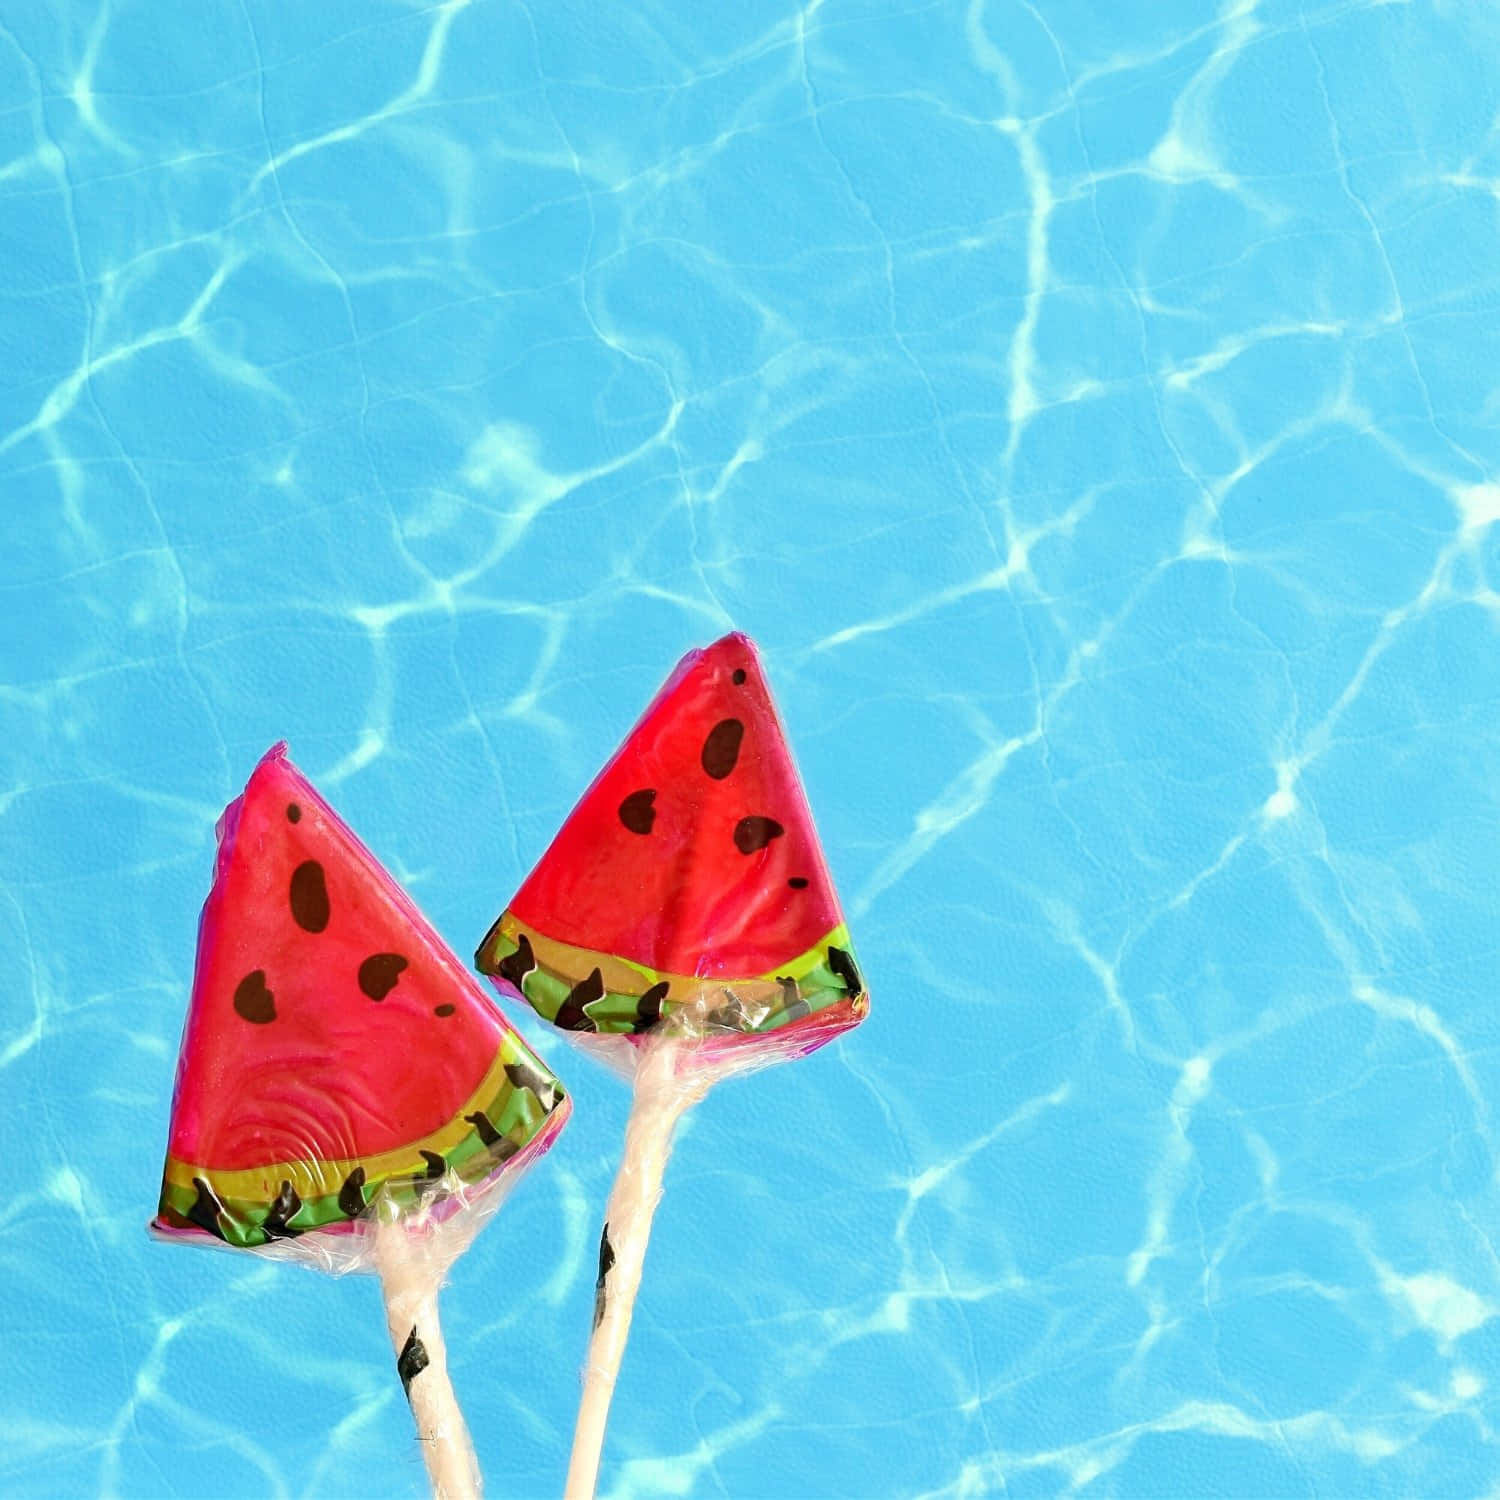 Summer Watermelon Popsicles Poolside Wallpaper